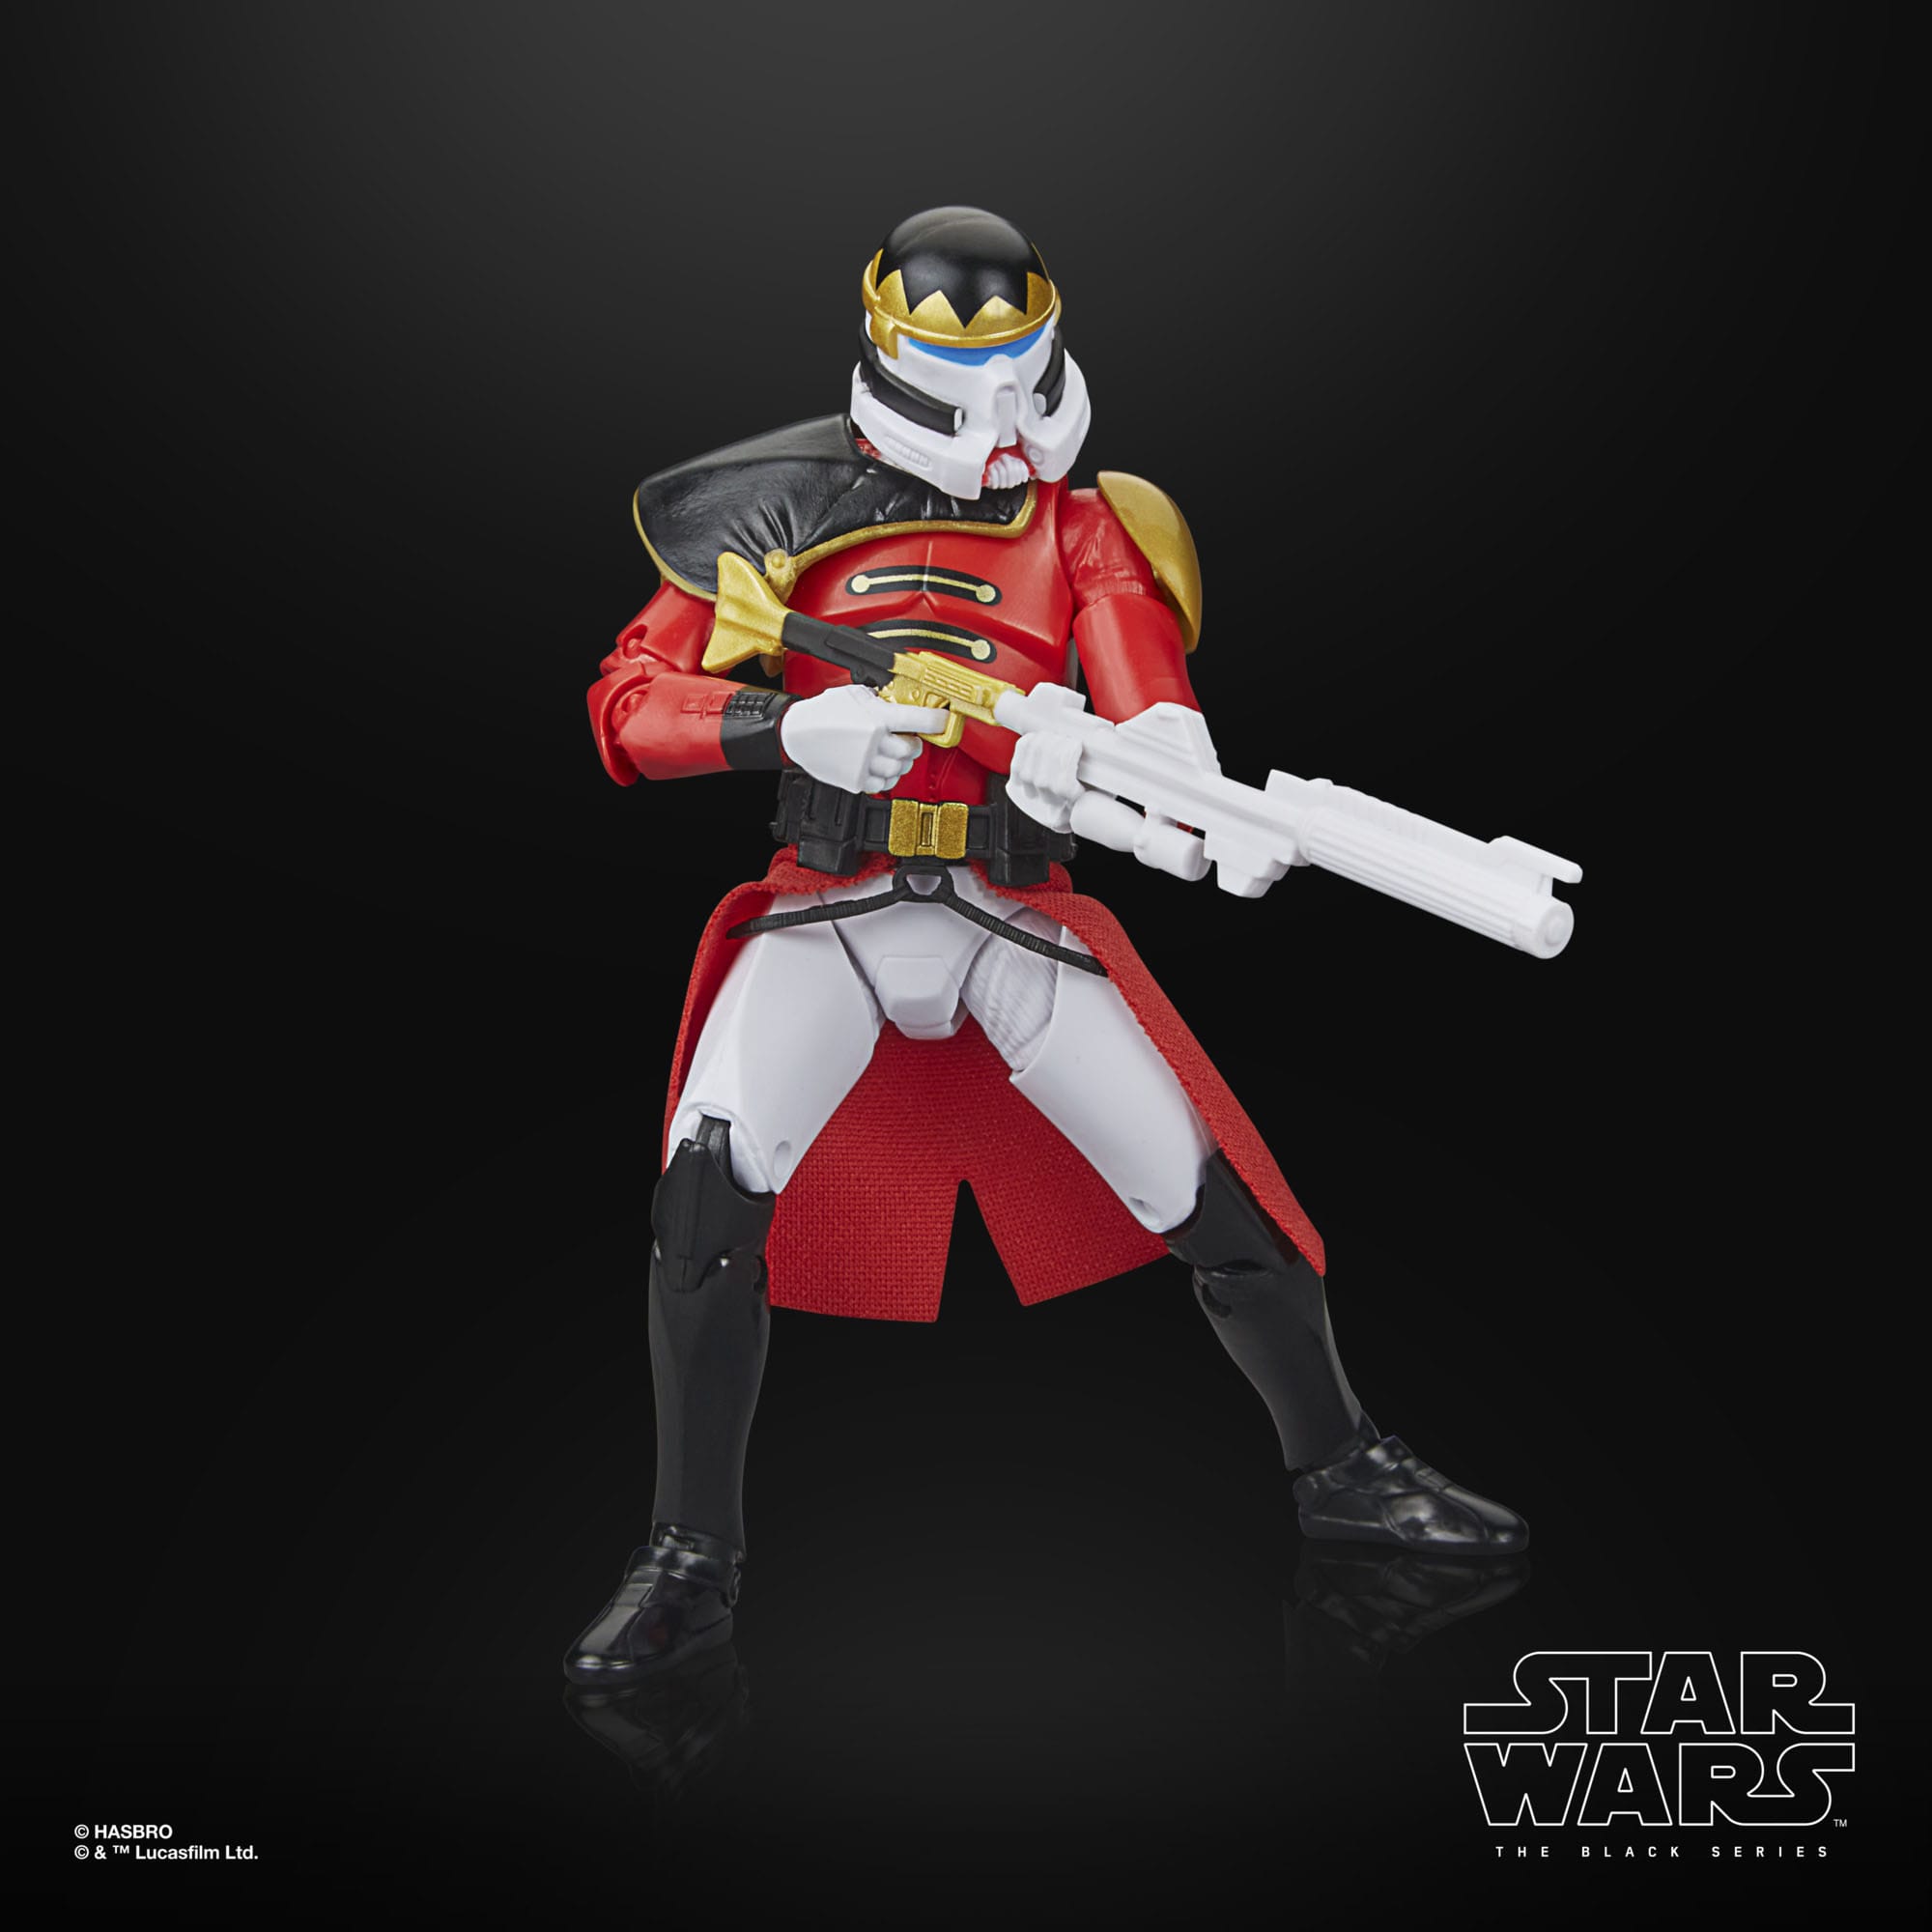 Star Wars Black Series Actionfigur Purge Trooper (Holiday Edition) 15 cm HASF8315 5010996179753